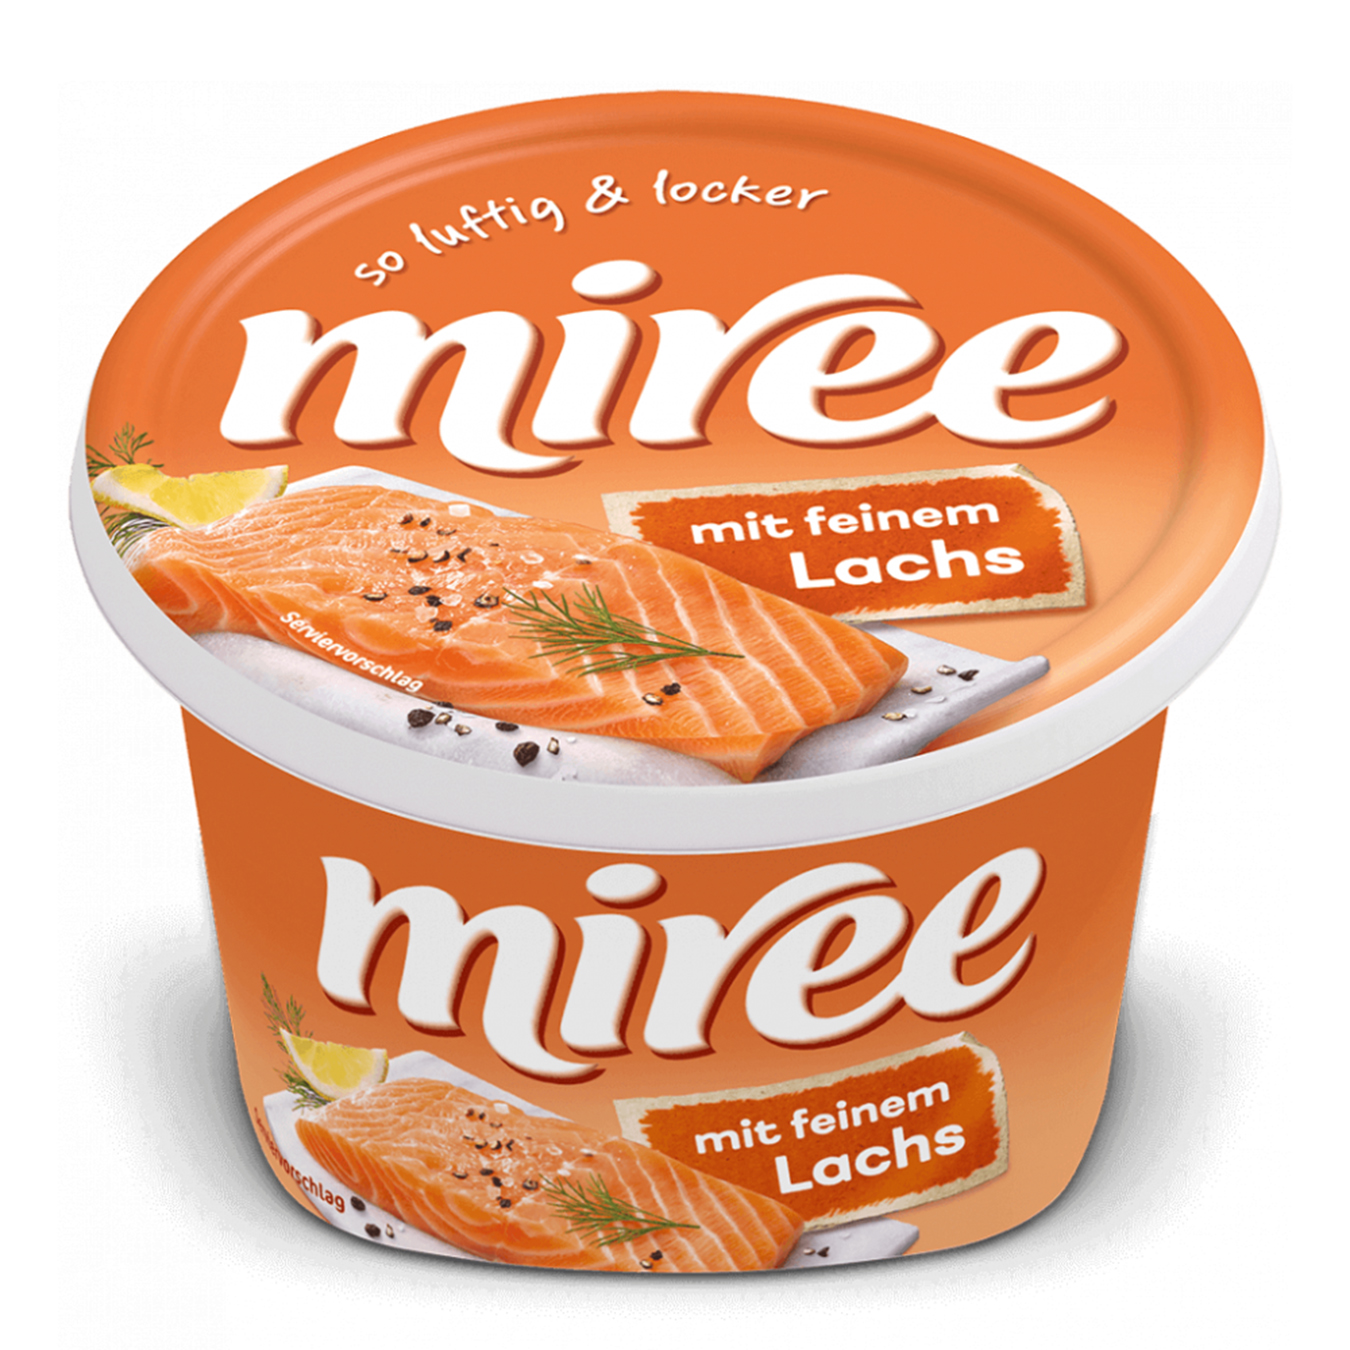 Miree salmon сream-cheese 66% 150g